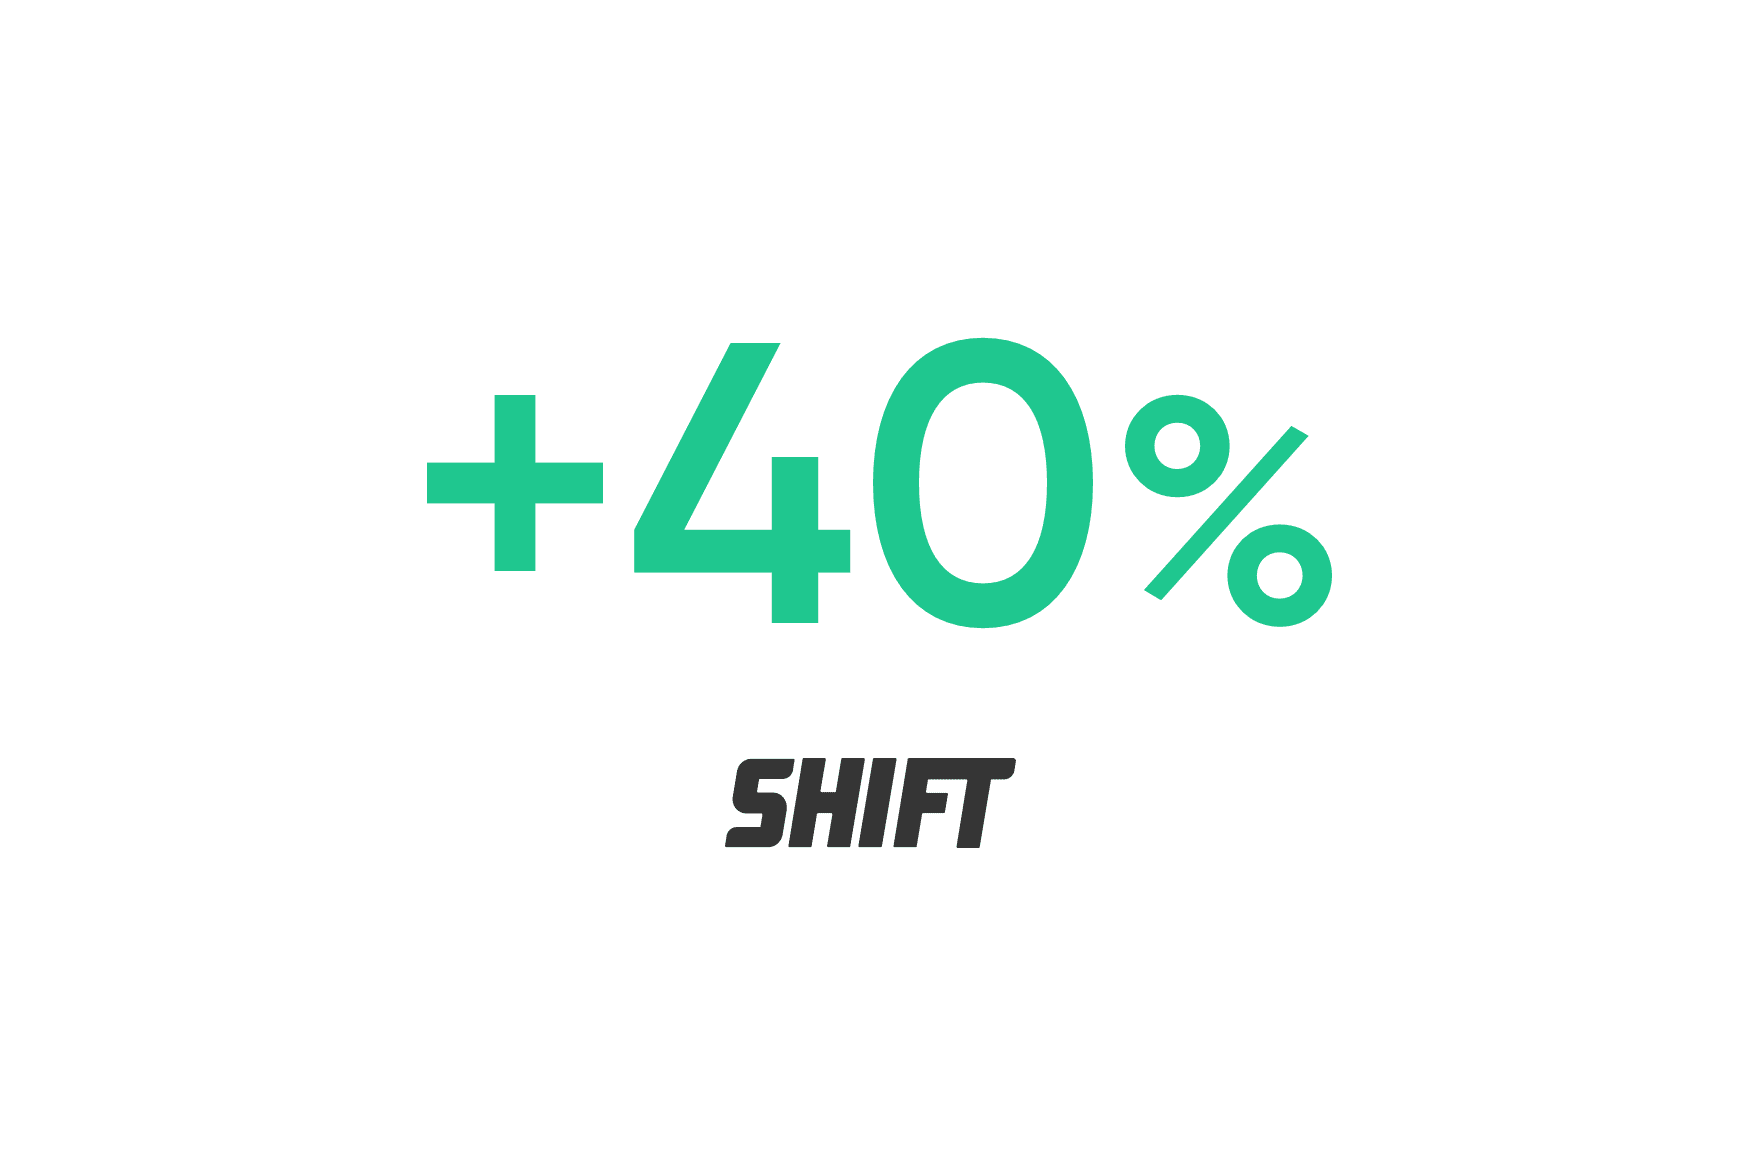 Shift: 40% increase of NPS